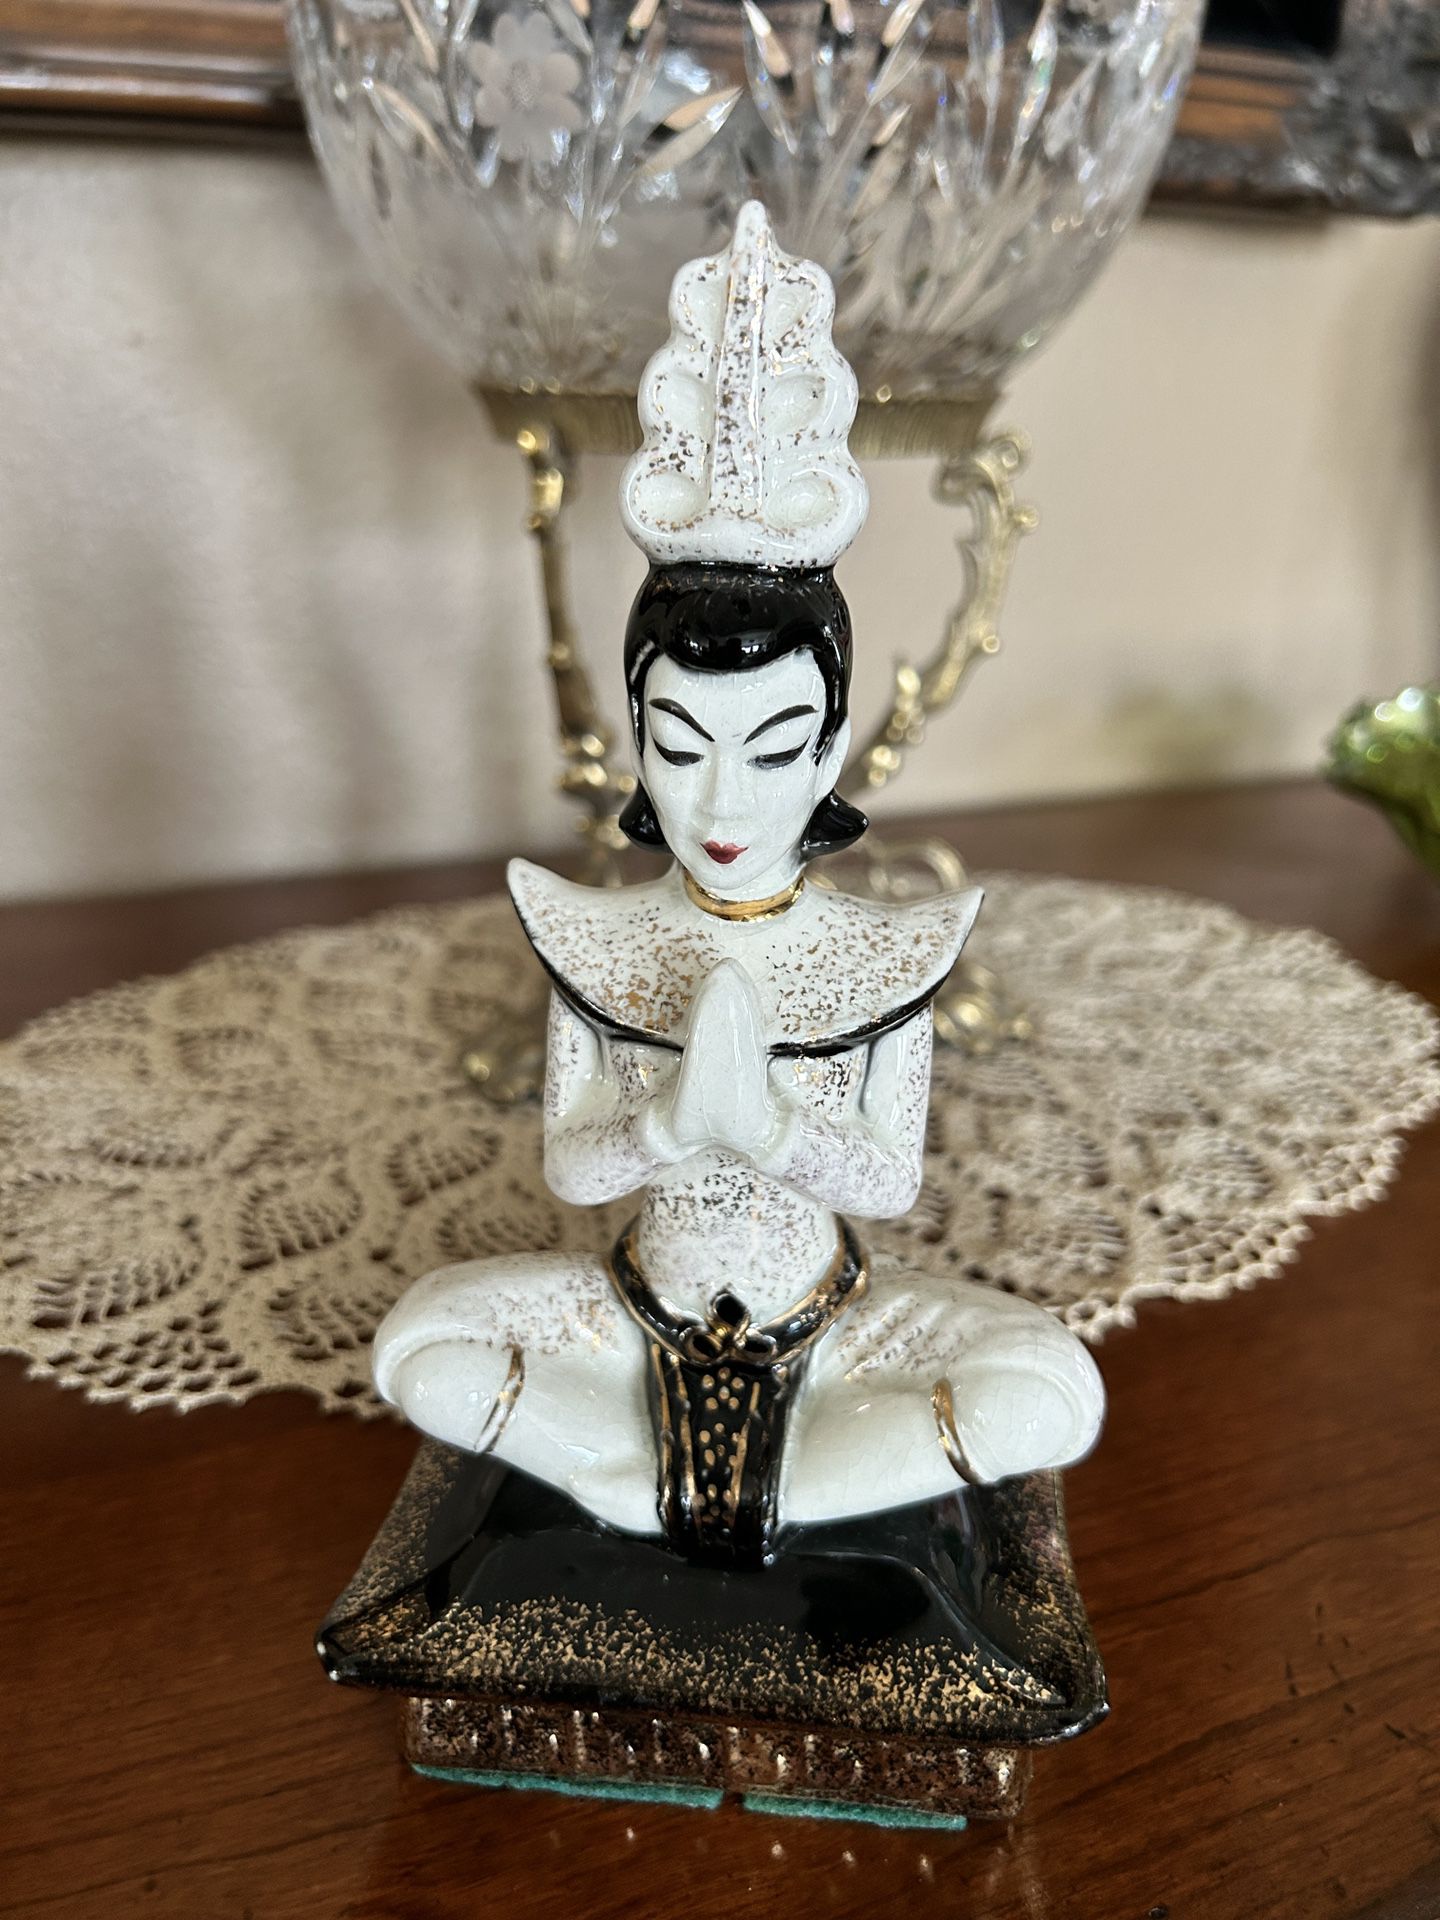 MCM 1950’s Ceramic Asian Praying Dancer Figurine, 8.5” Tall